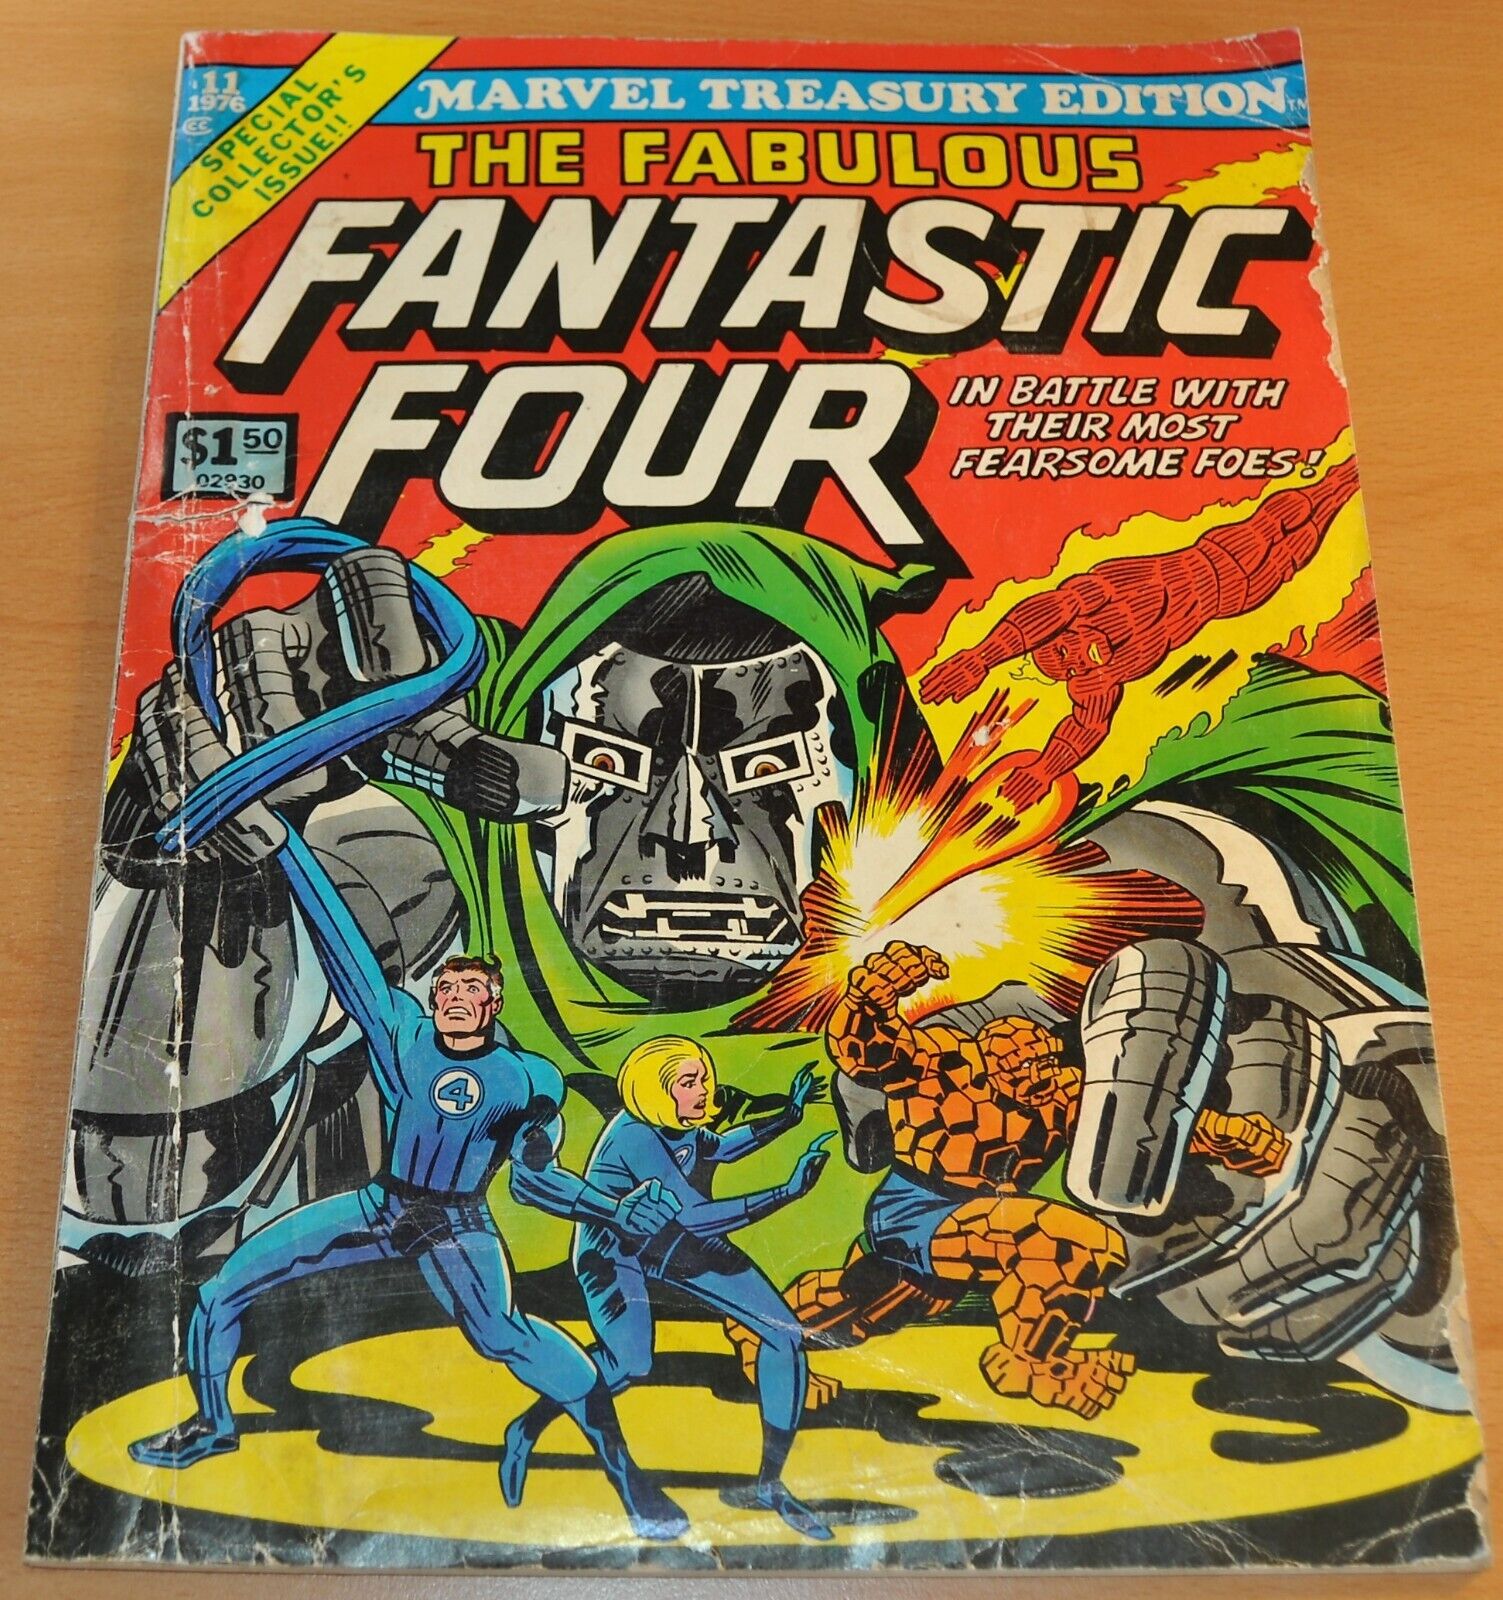 1976 The Fabulous Fantastic Four #11, Marvel Treasury Edition - Oversized comic